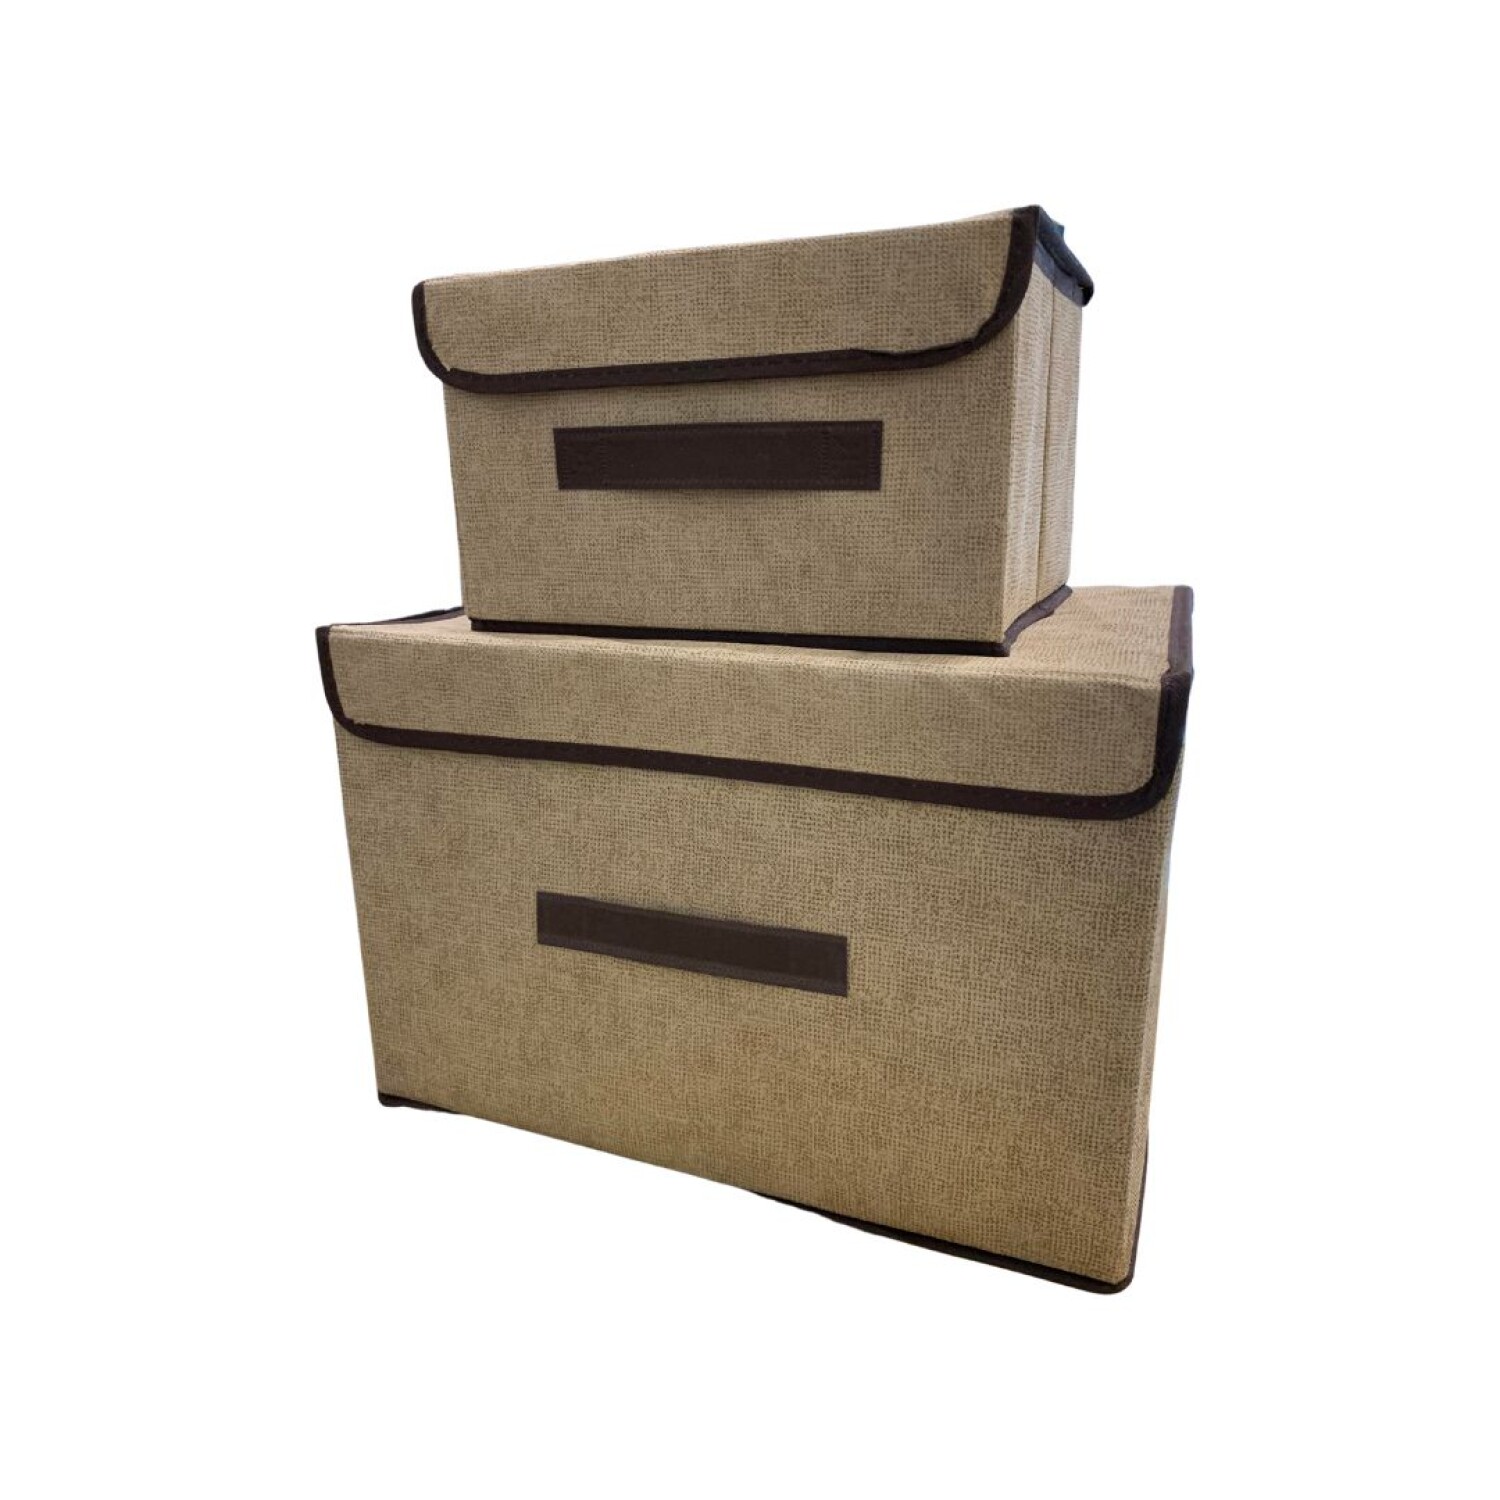 Organizador Caja Box Plegable Apilable X 2 Unidades — Una Ganga